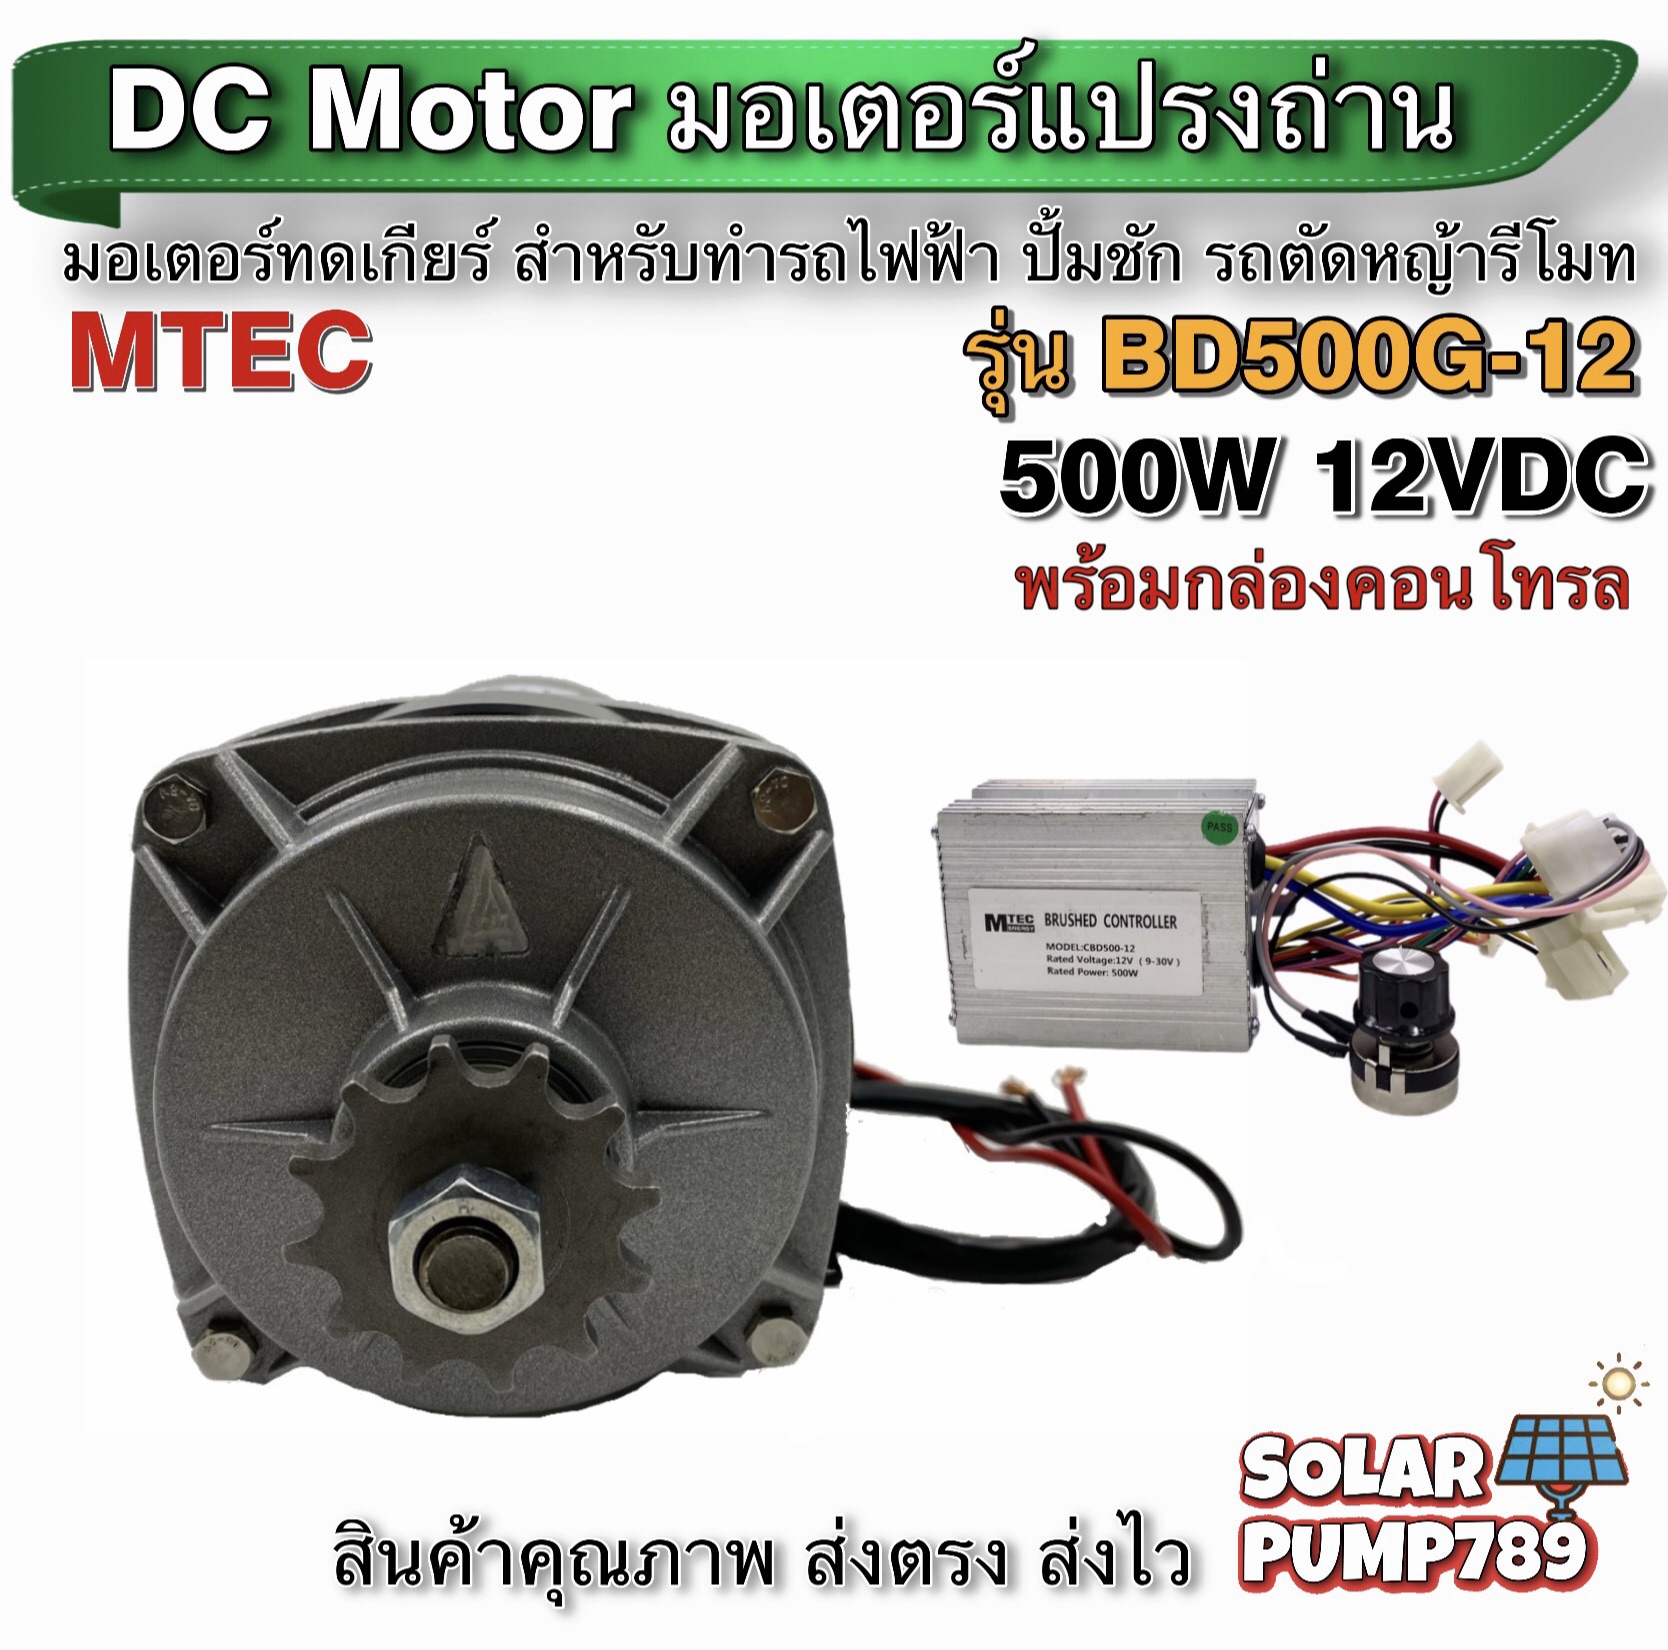 MTEC มอเตอร์ทดเกียร์ DC12V 500W 420RPM รุ่น BD500G-12 พร้อม กล่องคอนโทรล- MTEC DC Brushed Motor With Gear